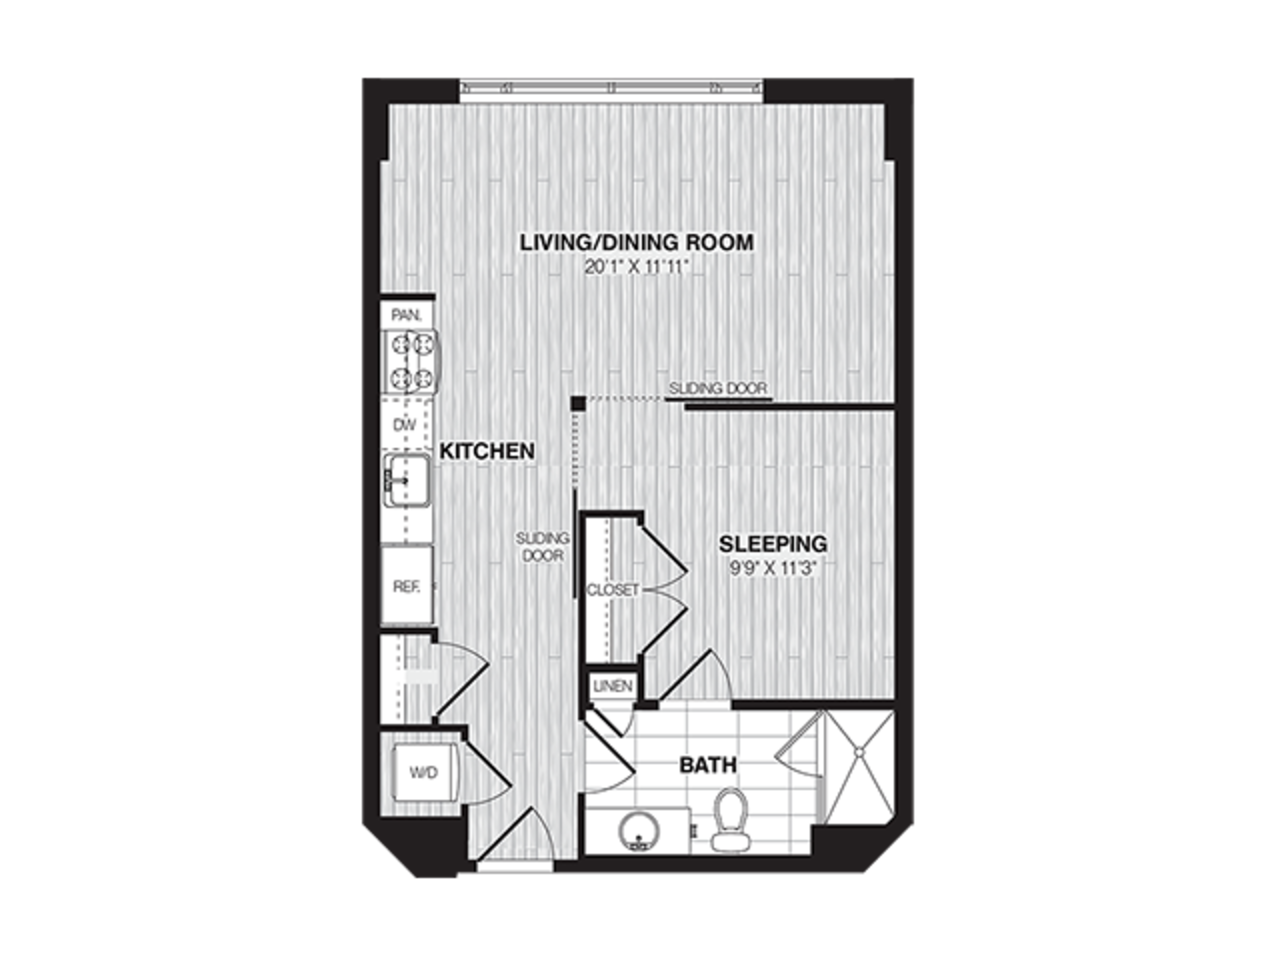 Floorplan diagram for Studio (624 SF), showing Studio